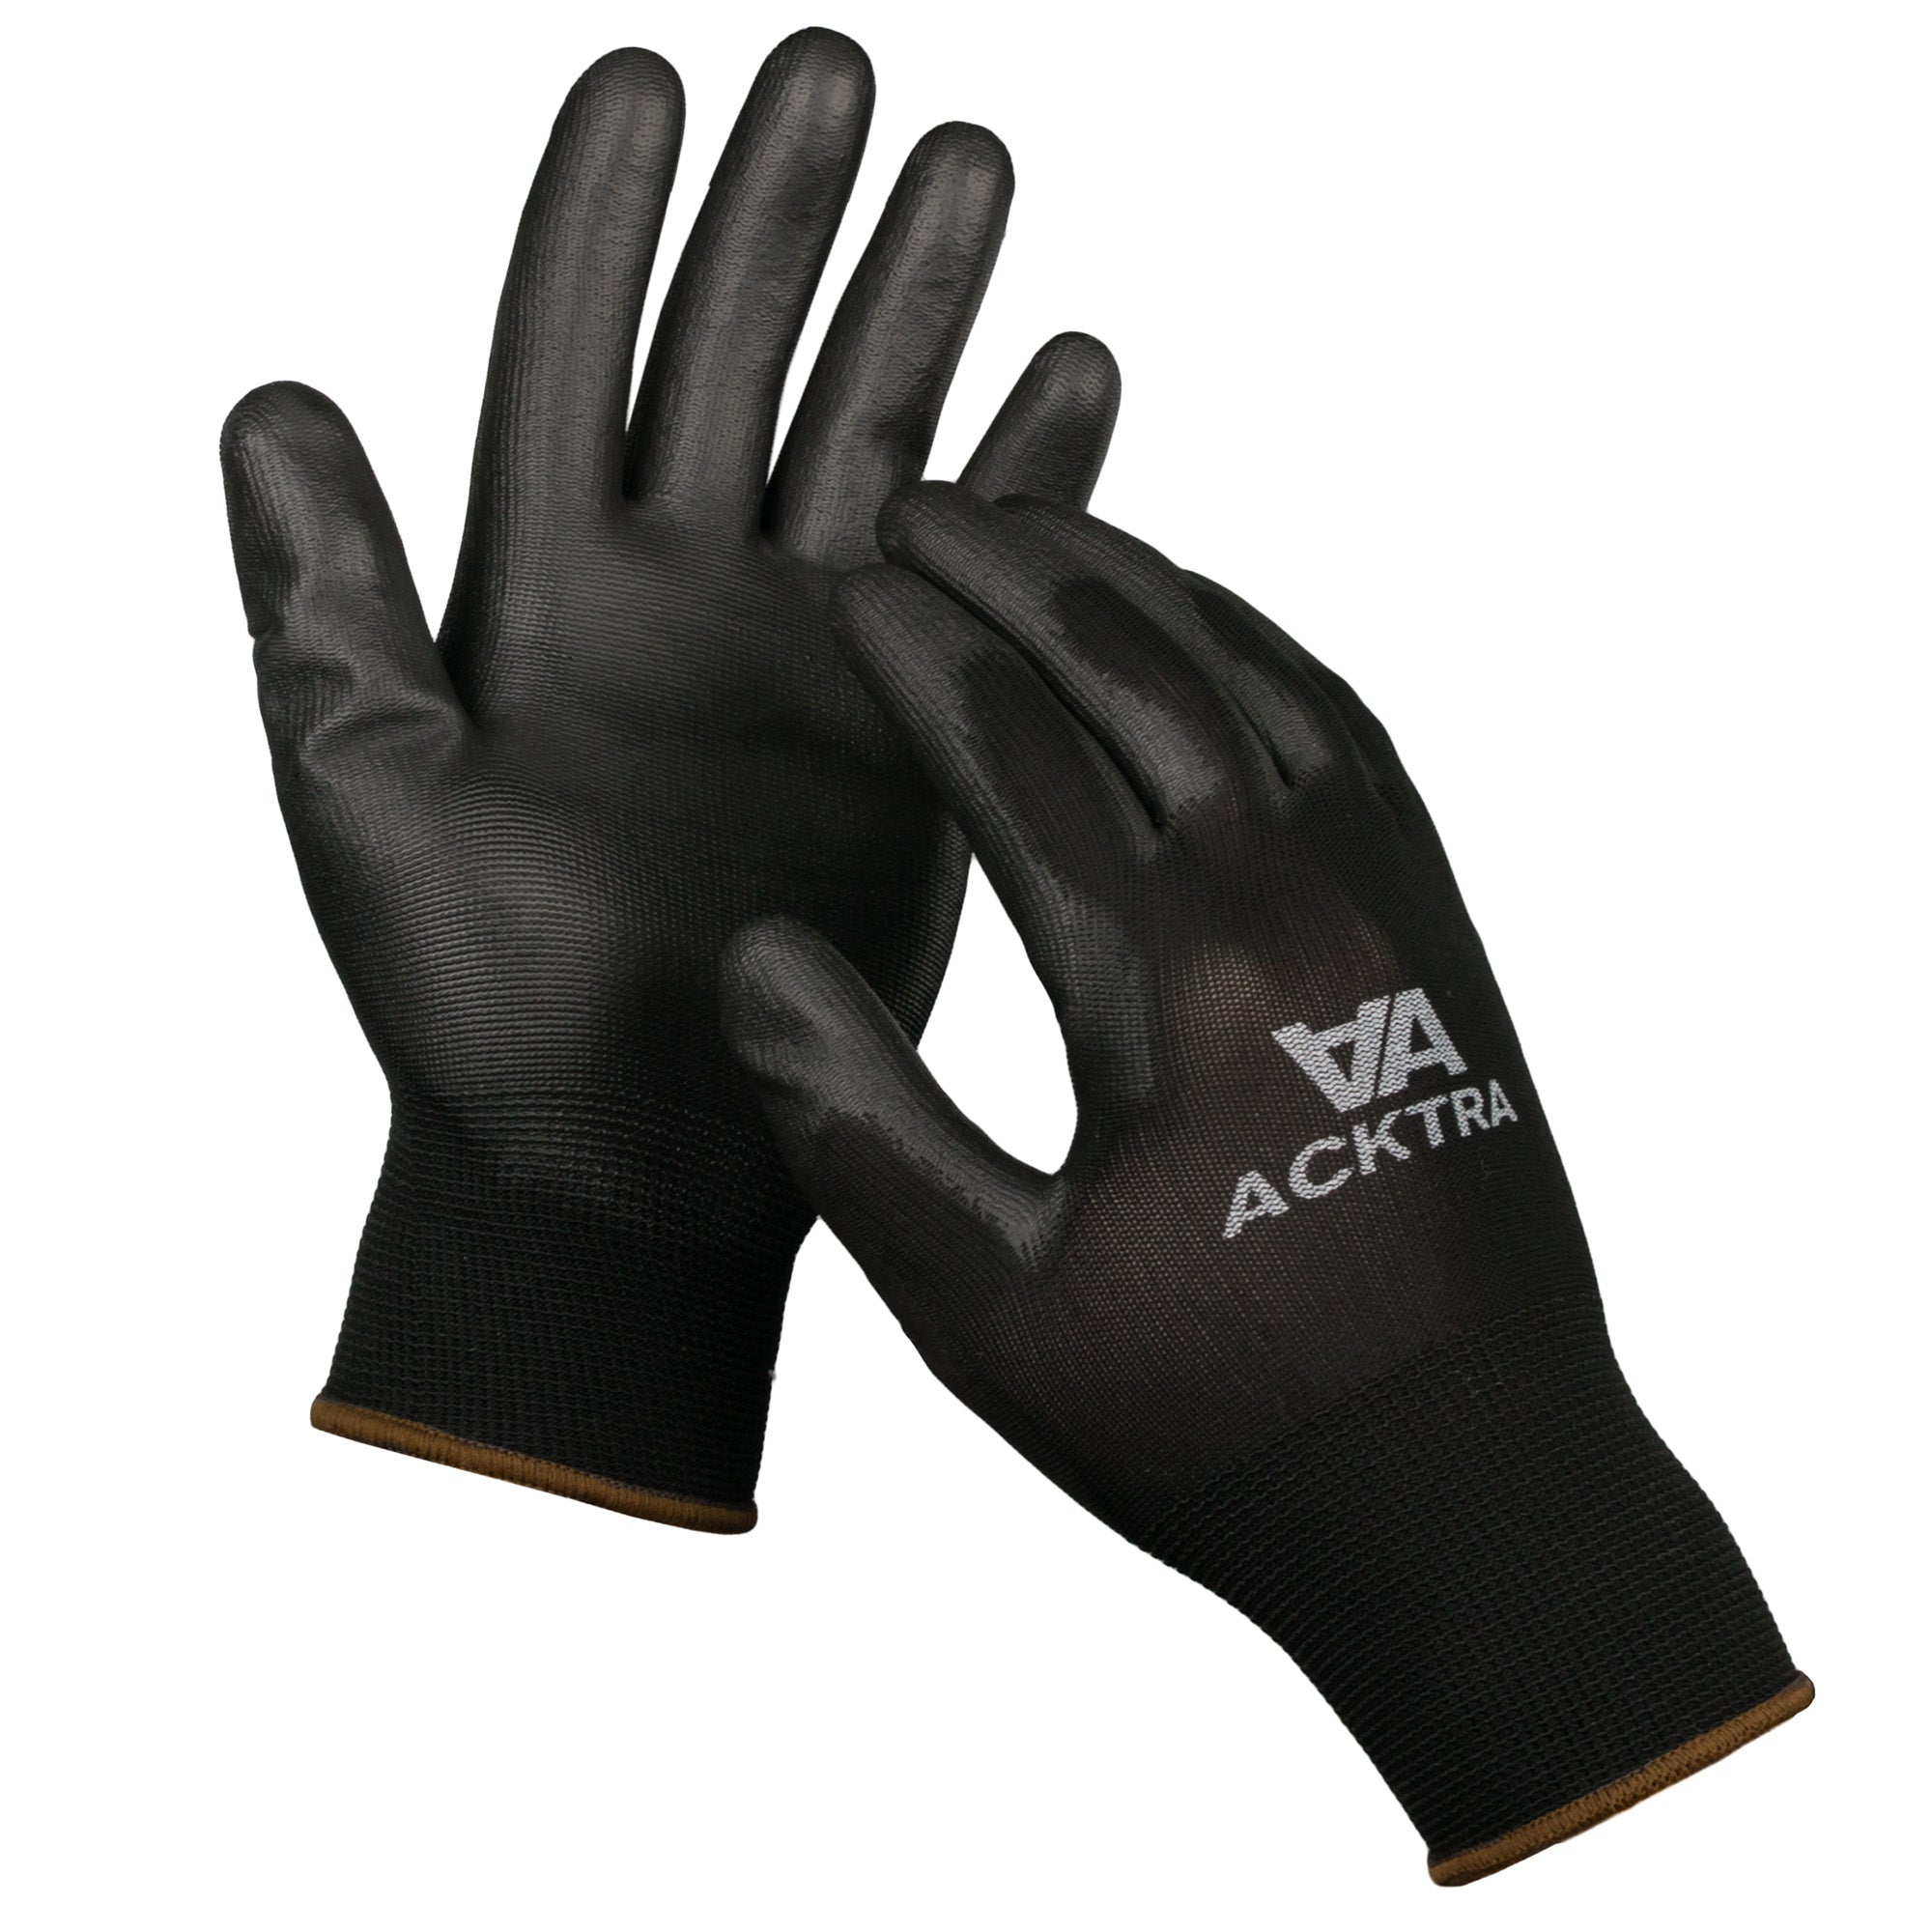 Htwon Work Gloves for men Ultra-Thin Coated Nitrile Foam Polyurethane Palm  Nylon Safety Gloves 